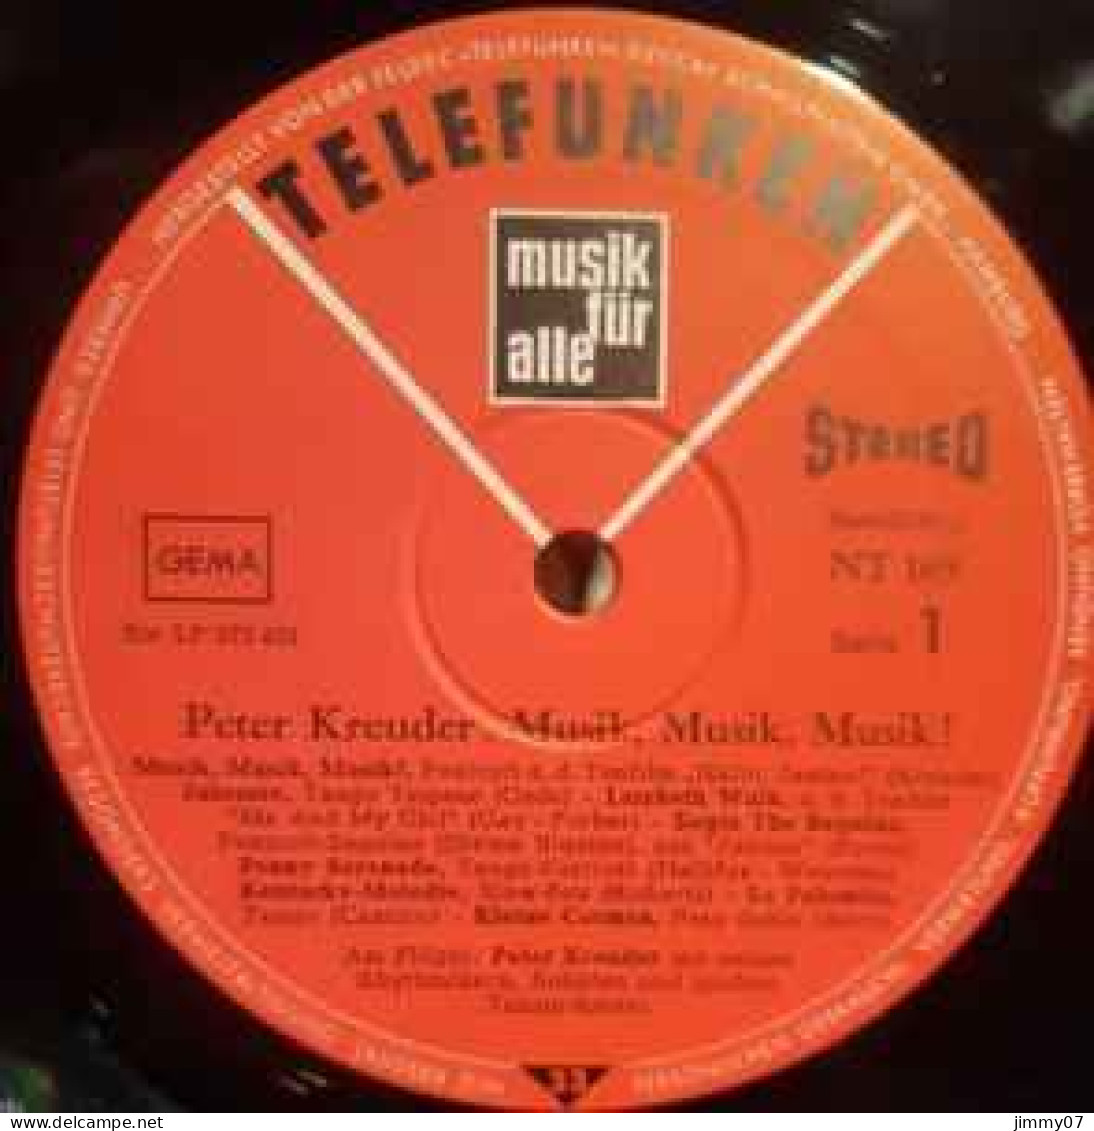 Peter Kreuder - Musik! Musik! Musik! (LP, Album) - Klassik